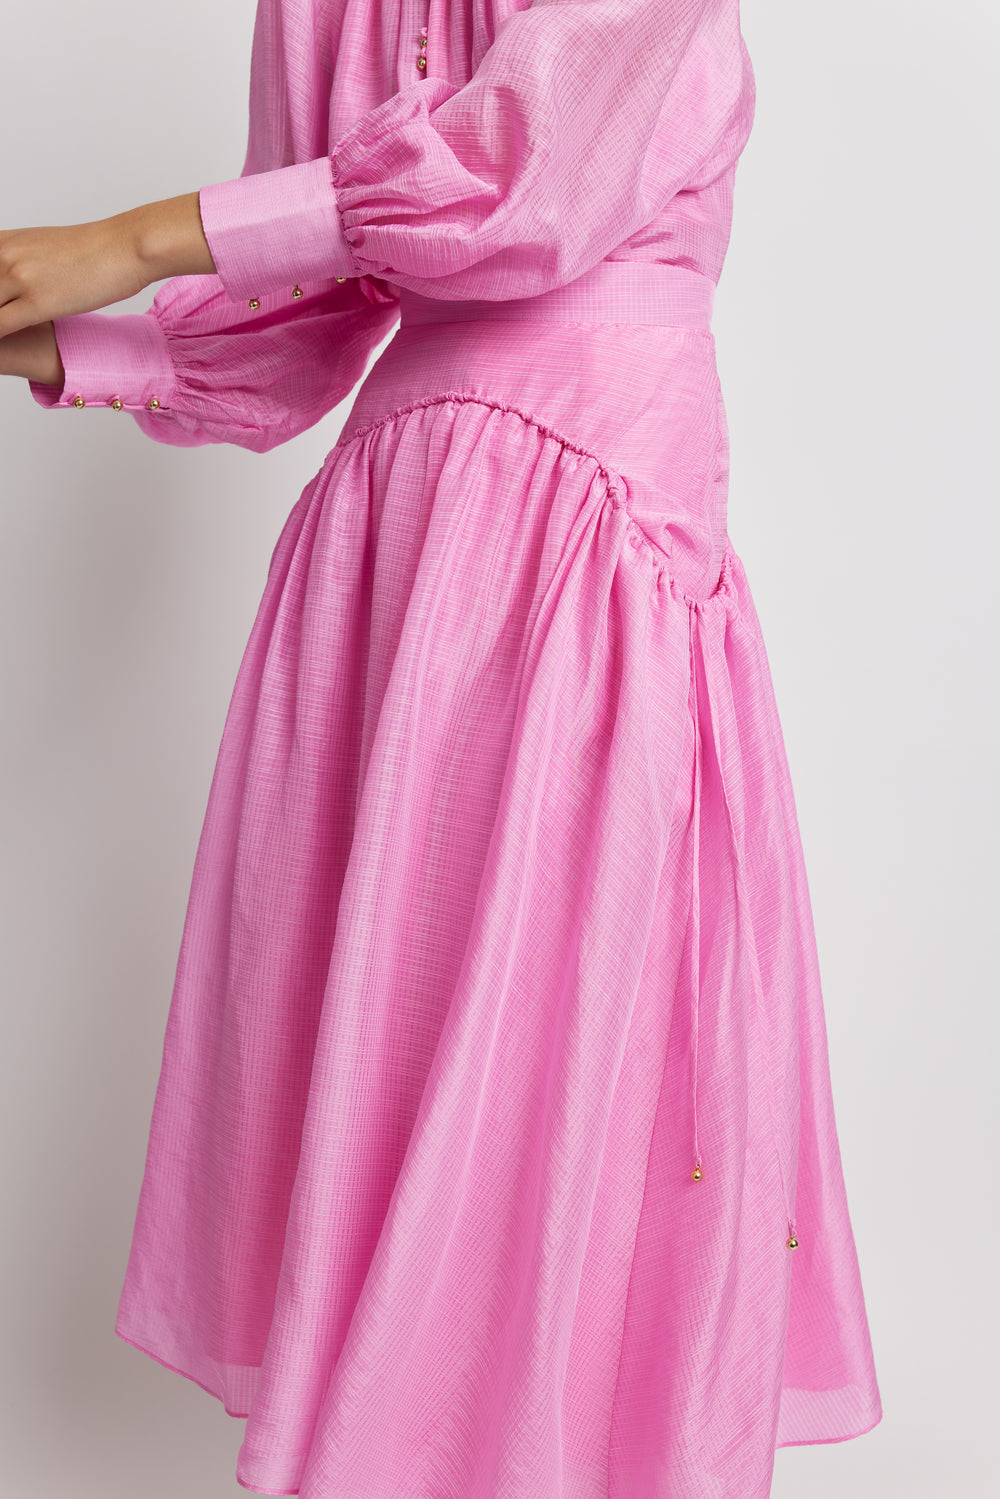 Sunset Mid Length Skirt - Pink